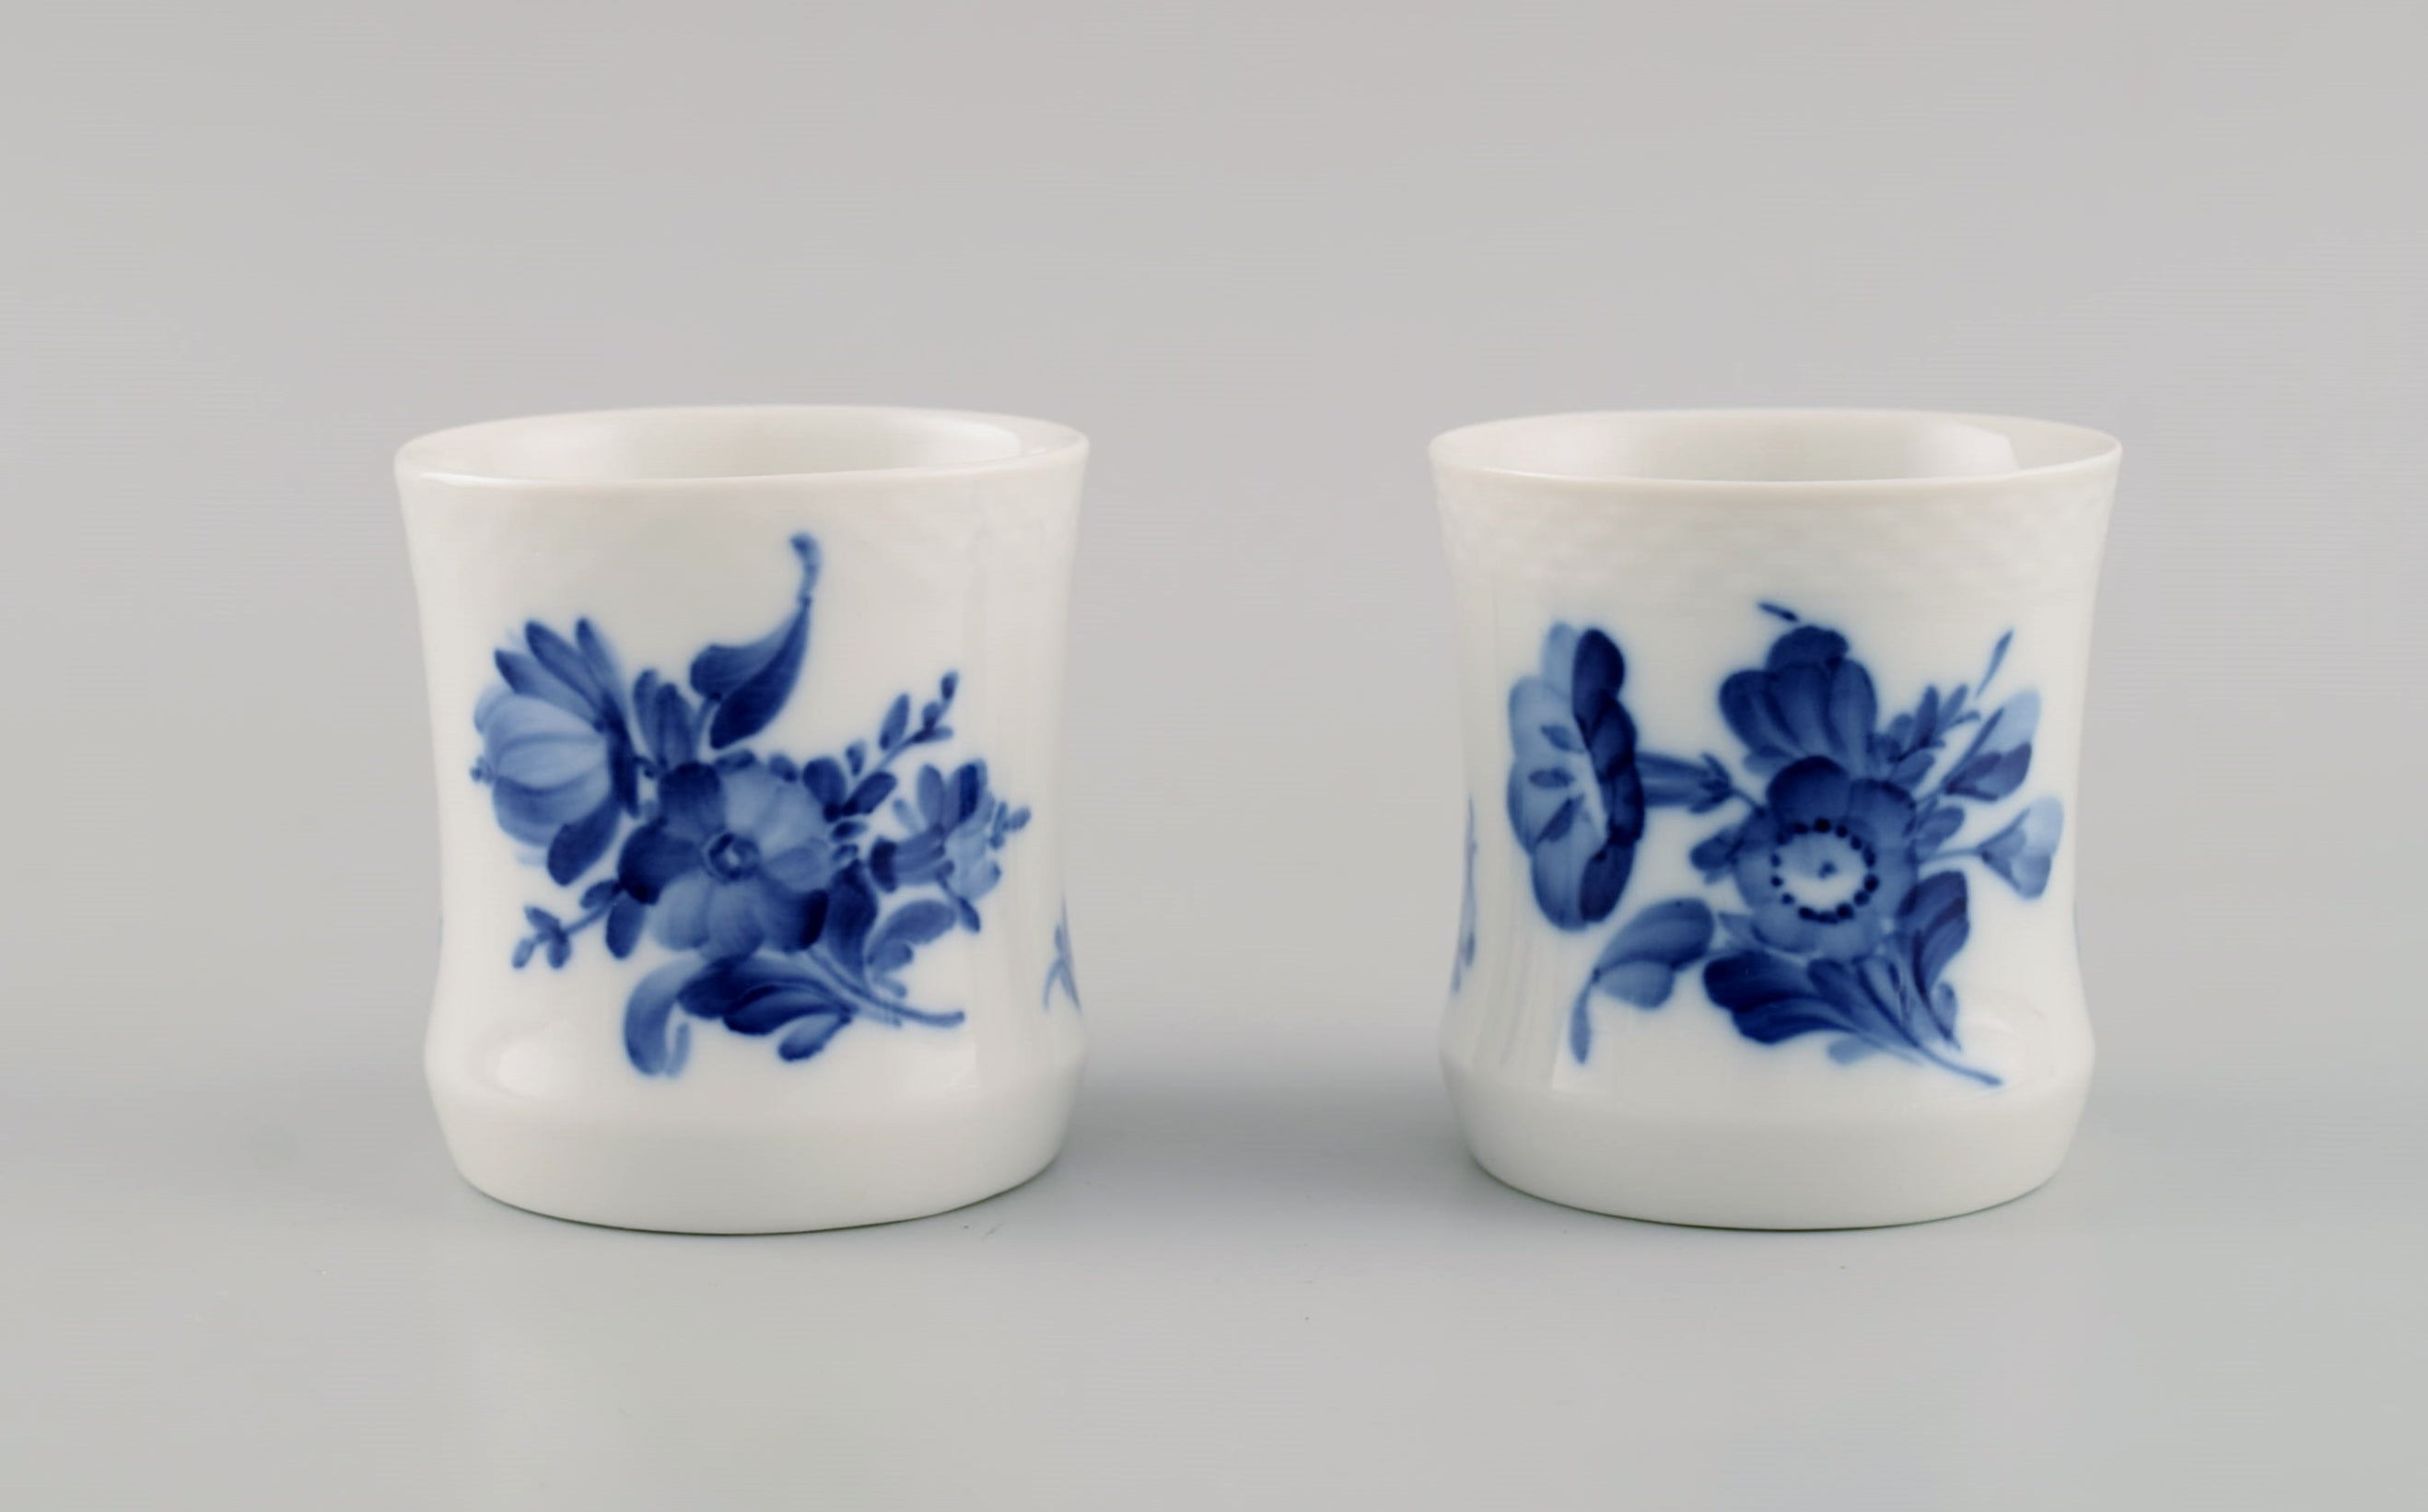 Blue Flower Braided Egg Cup From Royal Copenhagen.